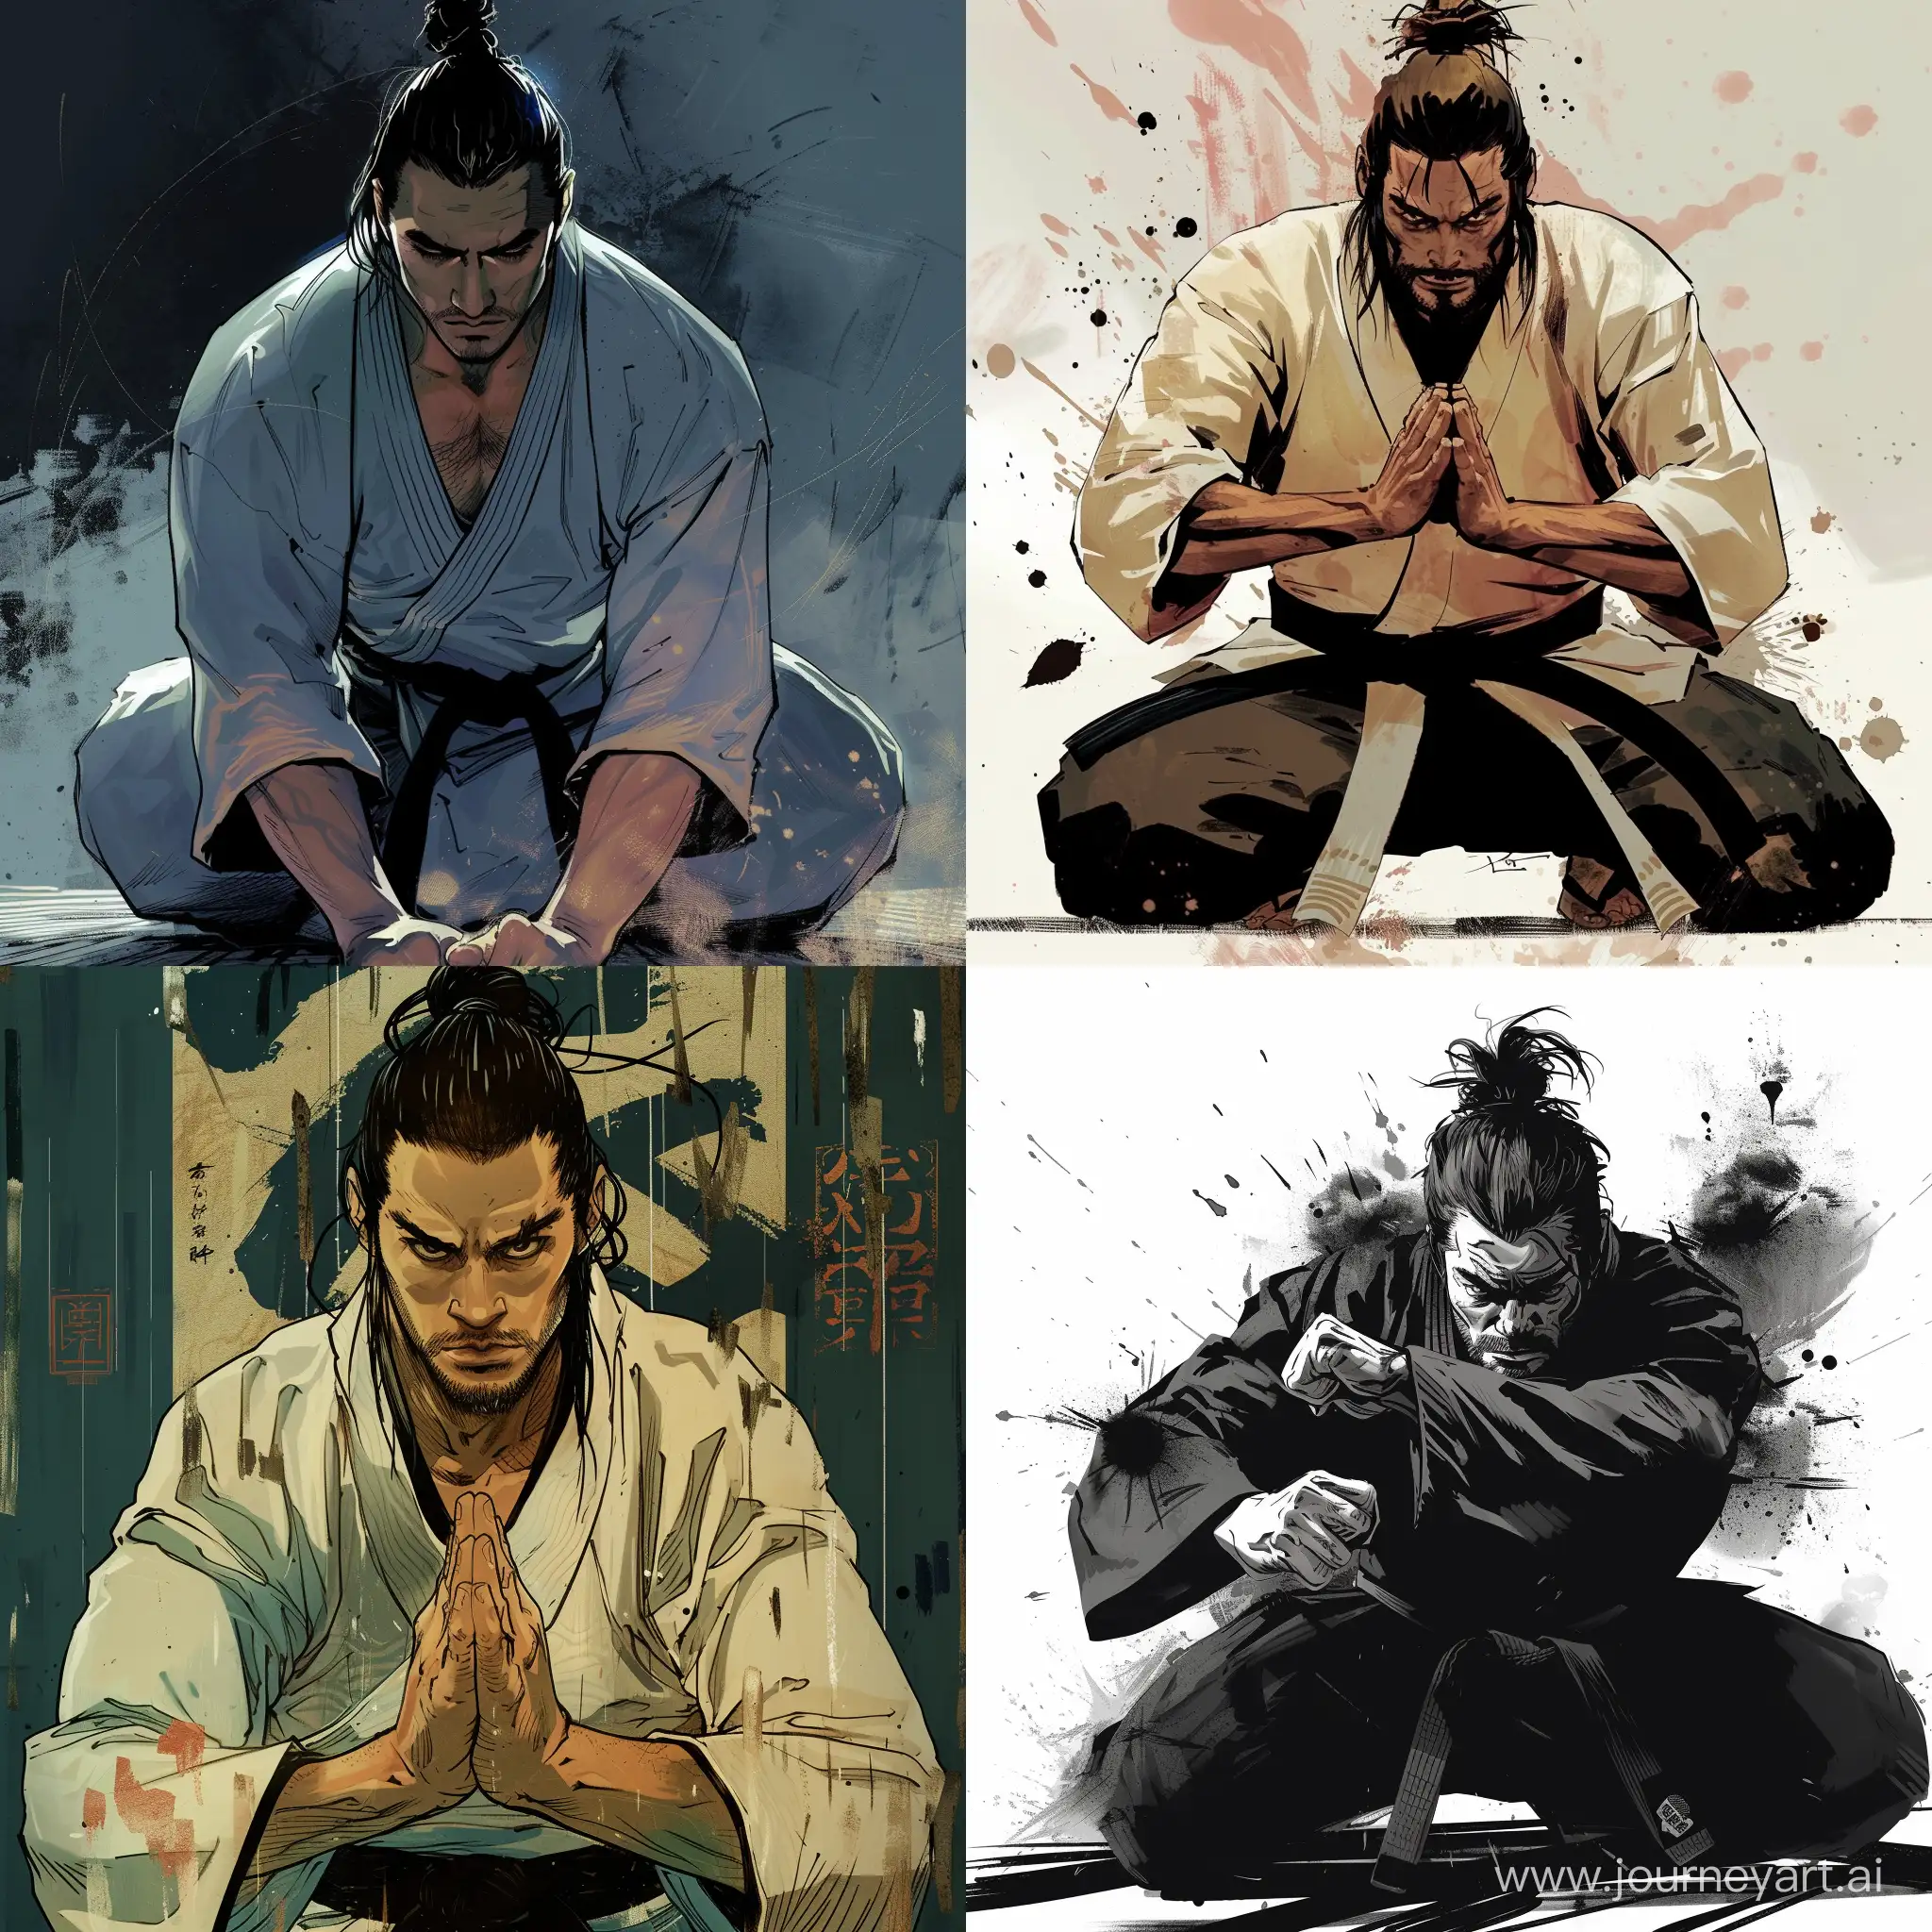 Dynamic-Samurai-Karate-A-Graphic-Novel-Tribute